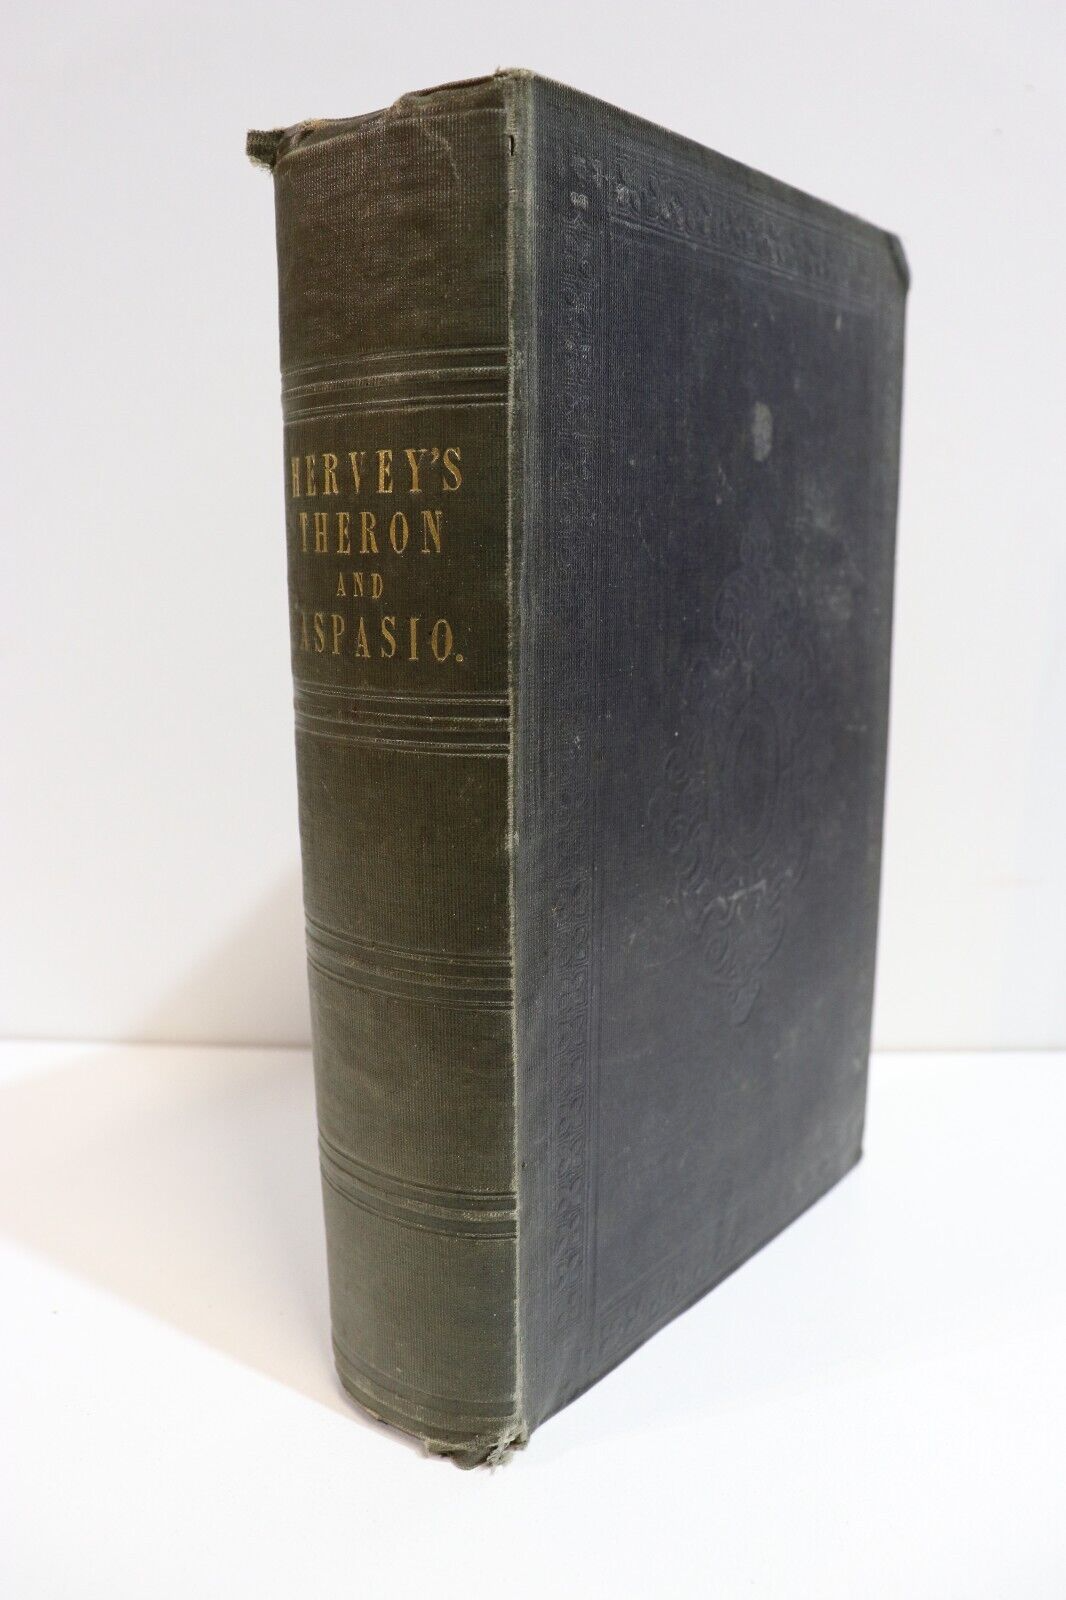 Theron and Aspasio by Rev. James Hervey - 1837 - Antique Religious Book